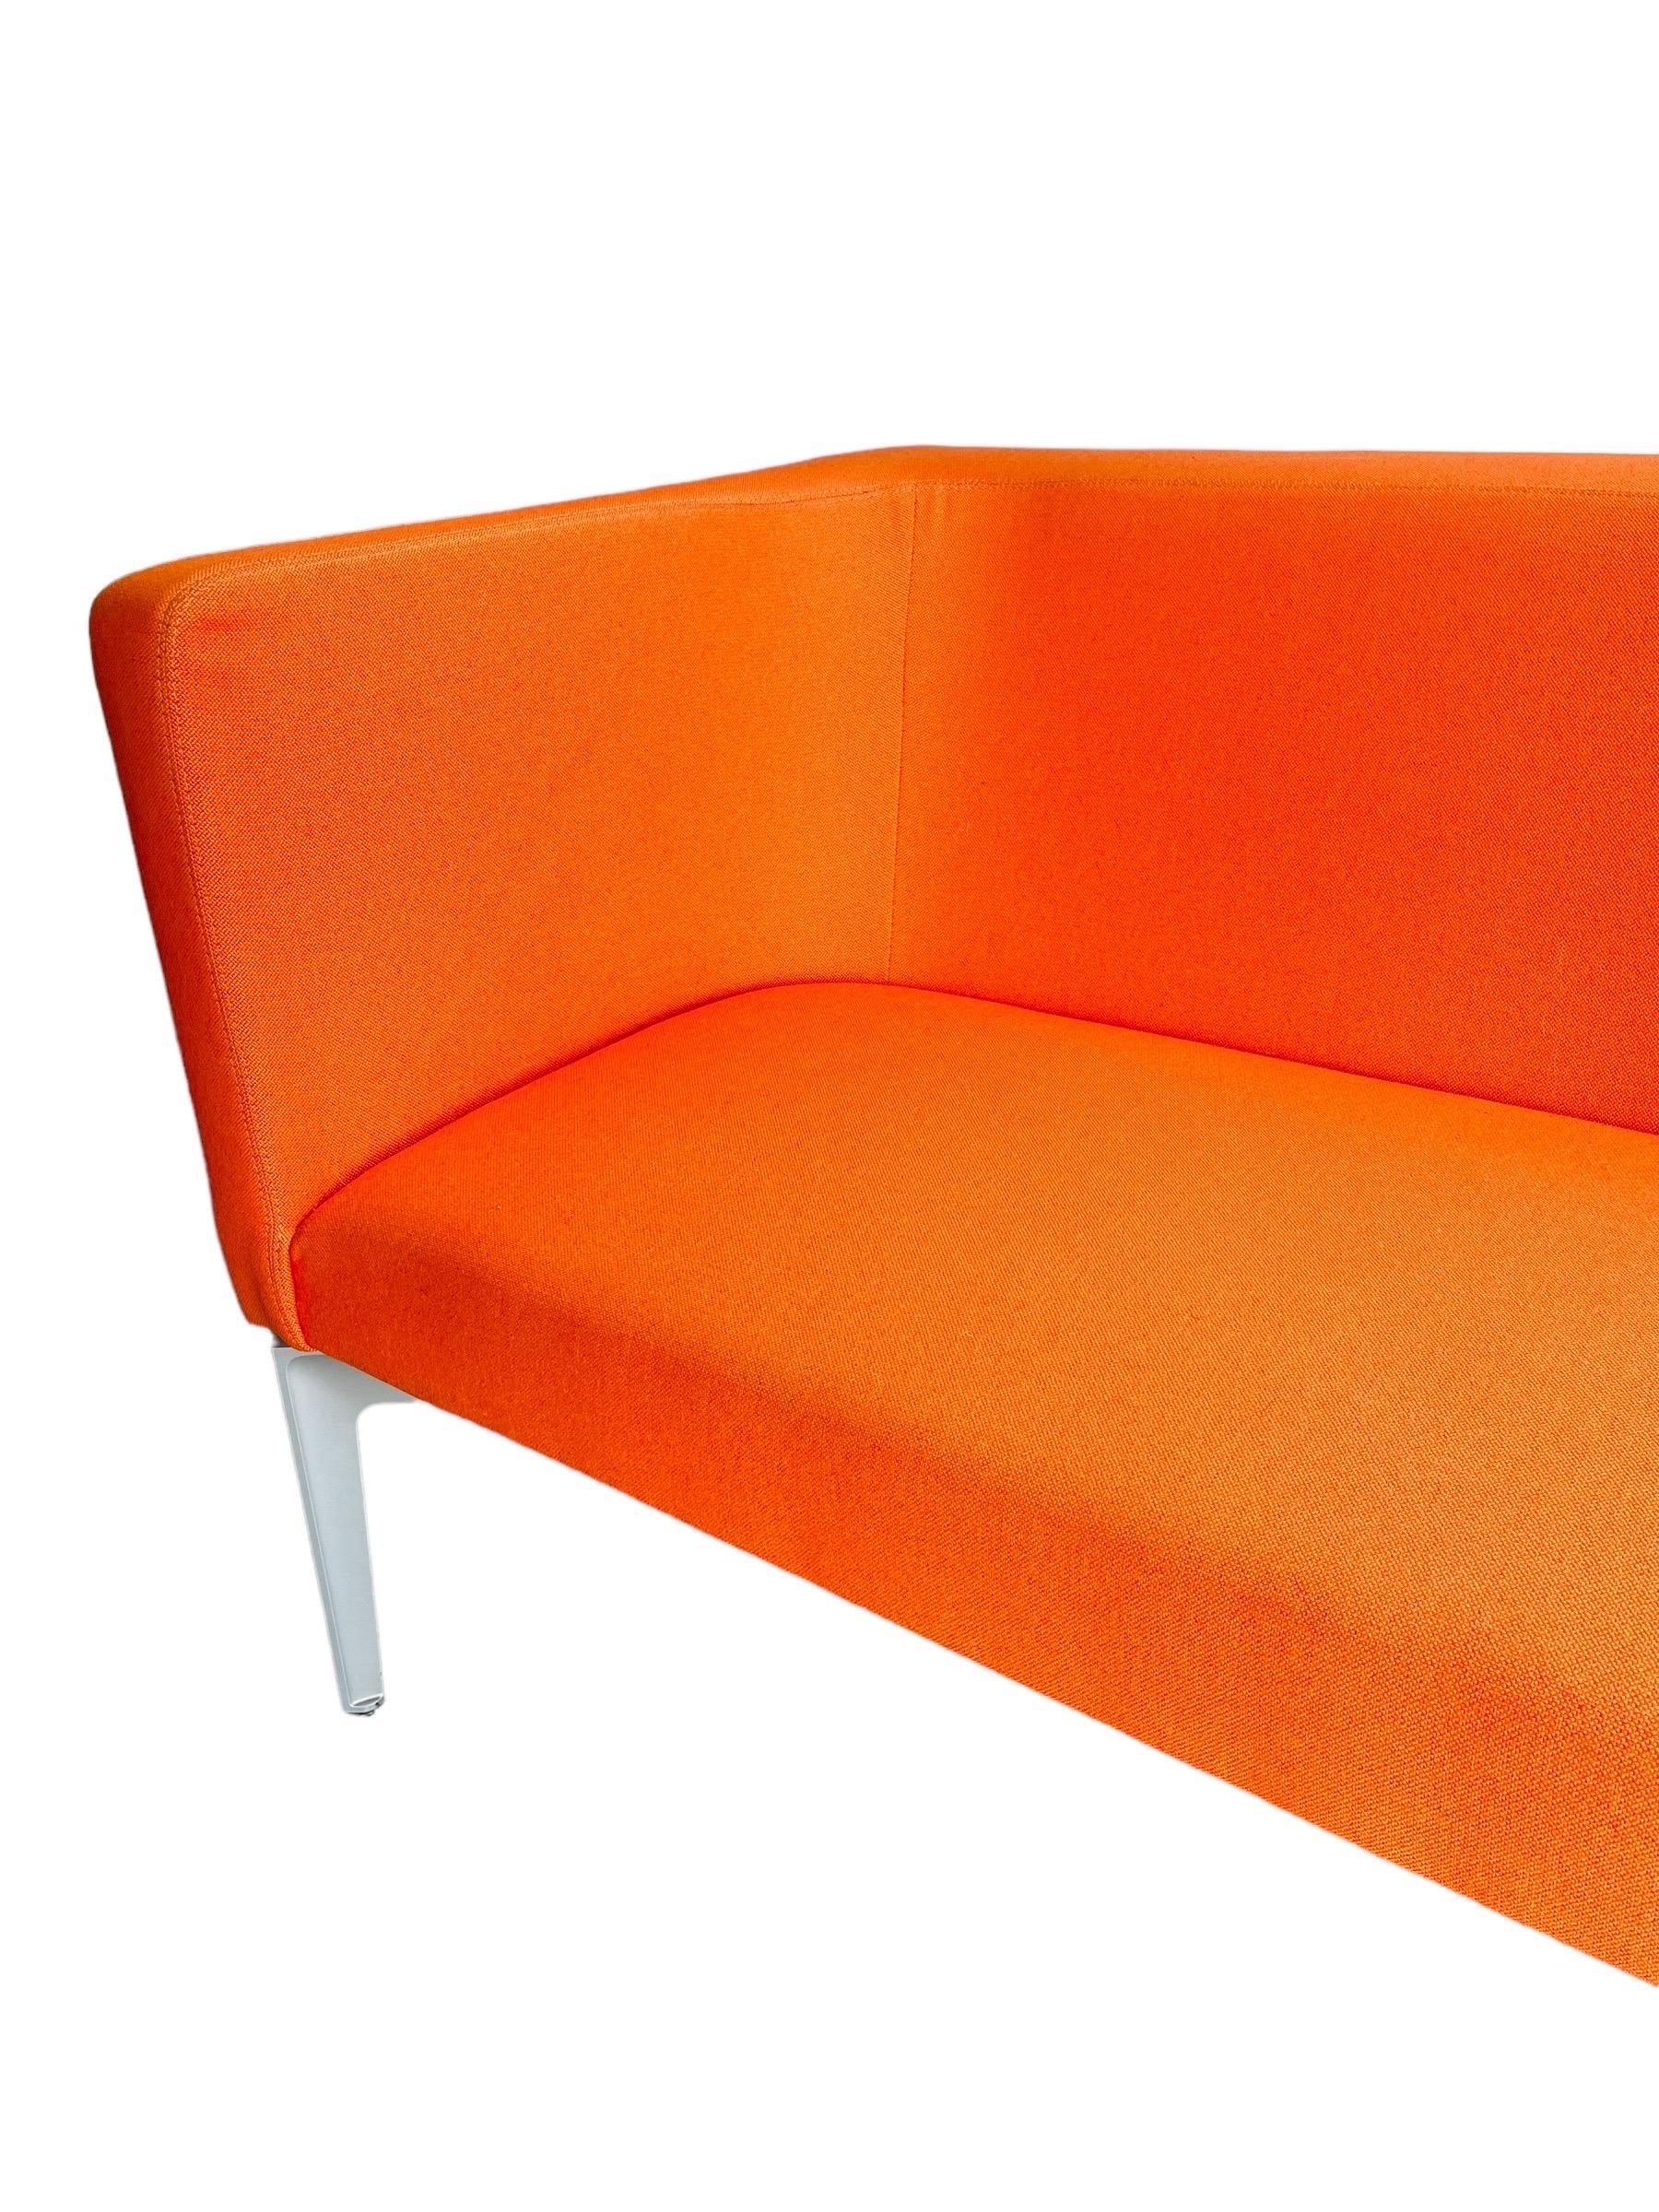 Fabric Steelcase Bivi Rumble Seat Collection: Vibrant Orange Modern Sofa